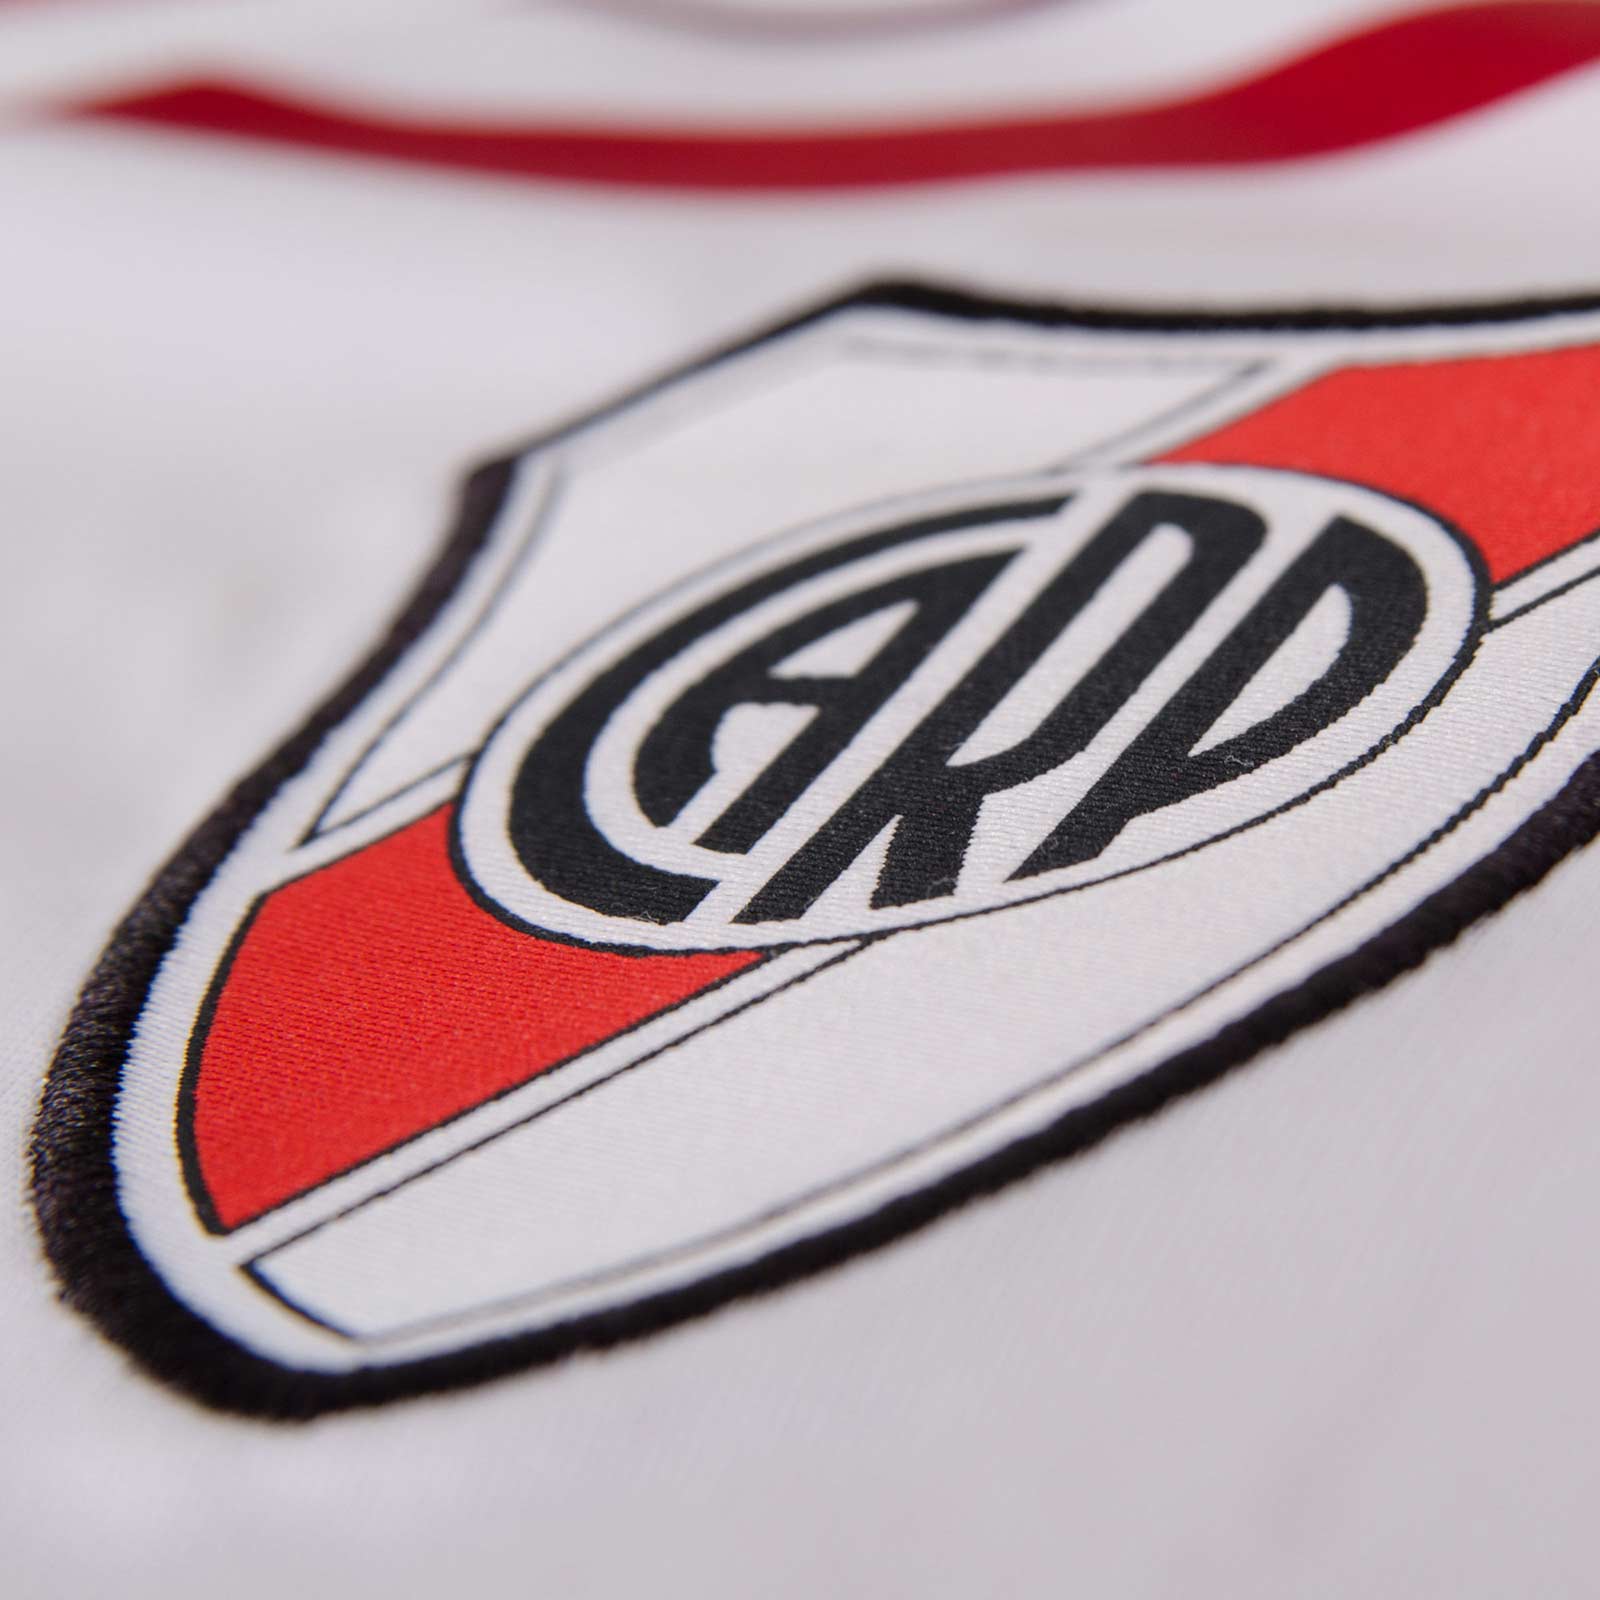 River Plate 2016 Away Kit Released - Footy Headlines